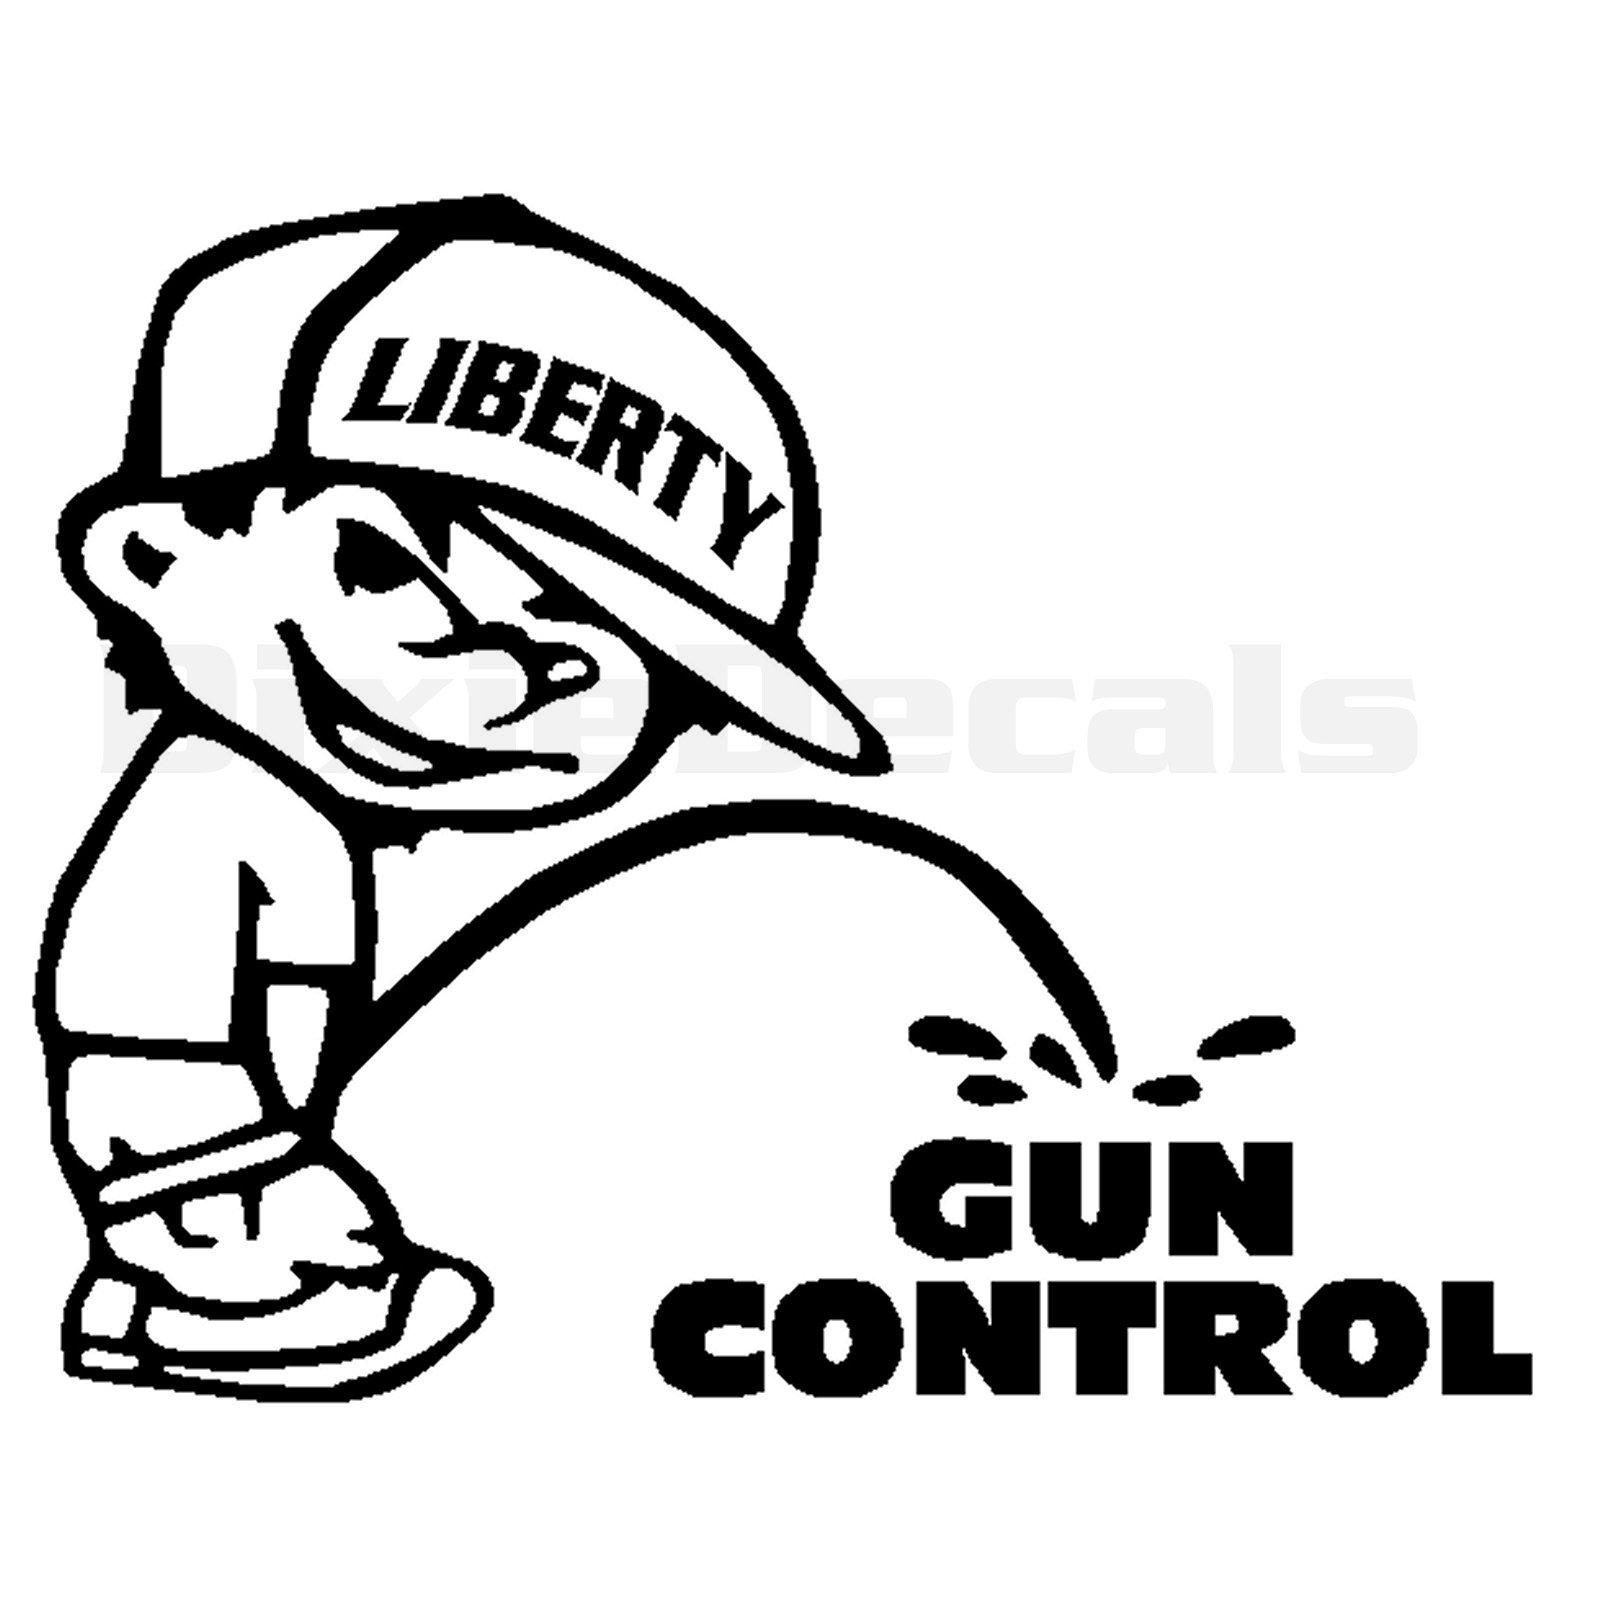 gun, Control, Weapon, Politics, Anarchy, Protest, Political, Weapons, Guns, Sadic, Calvin, Hobbes Wallpaper